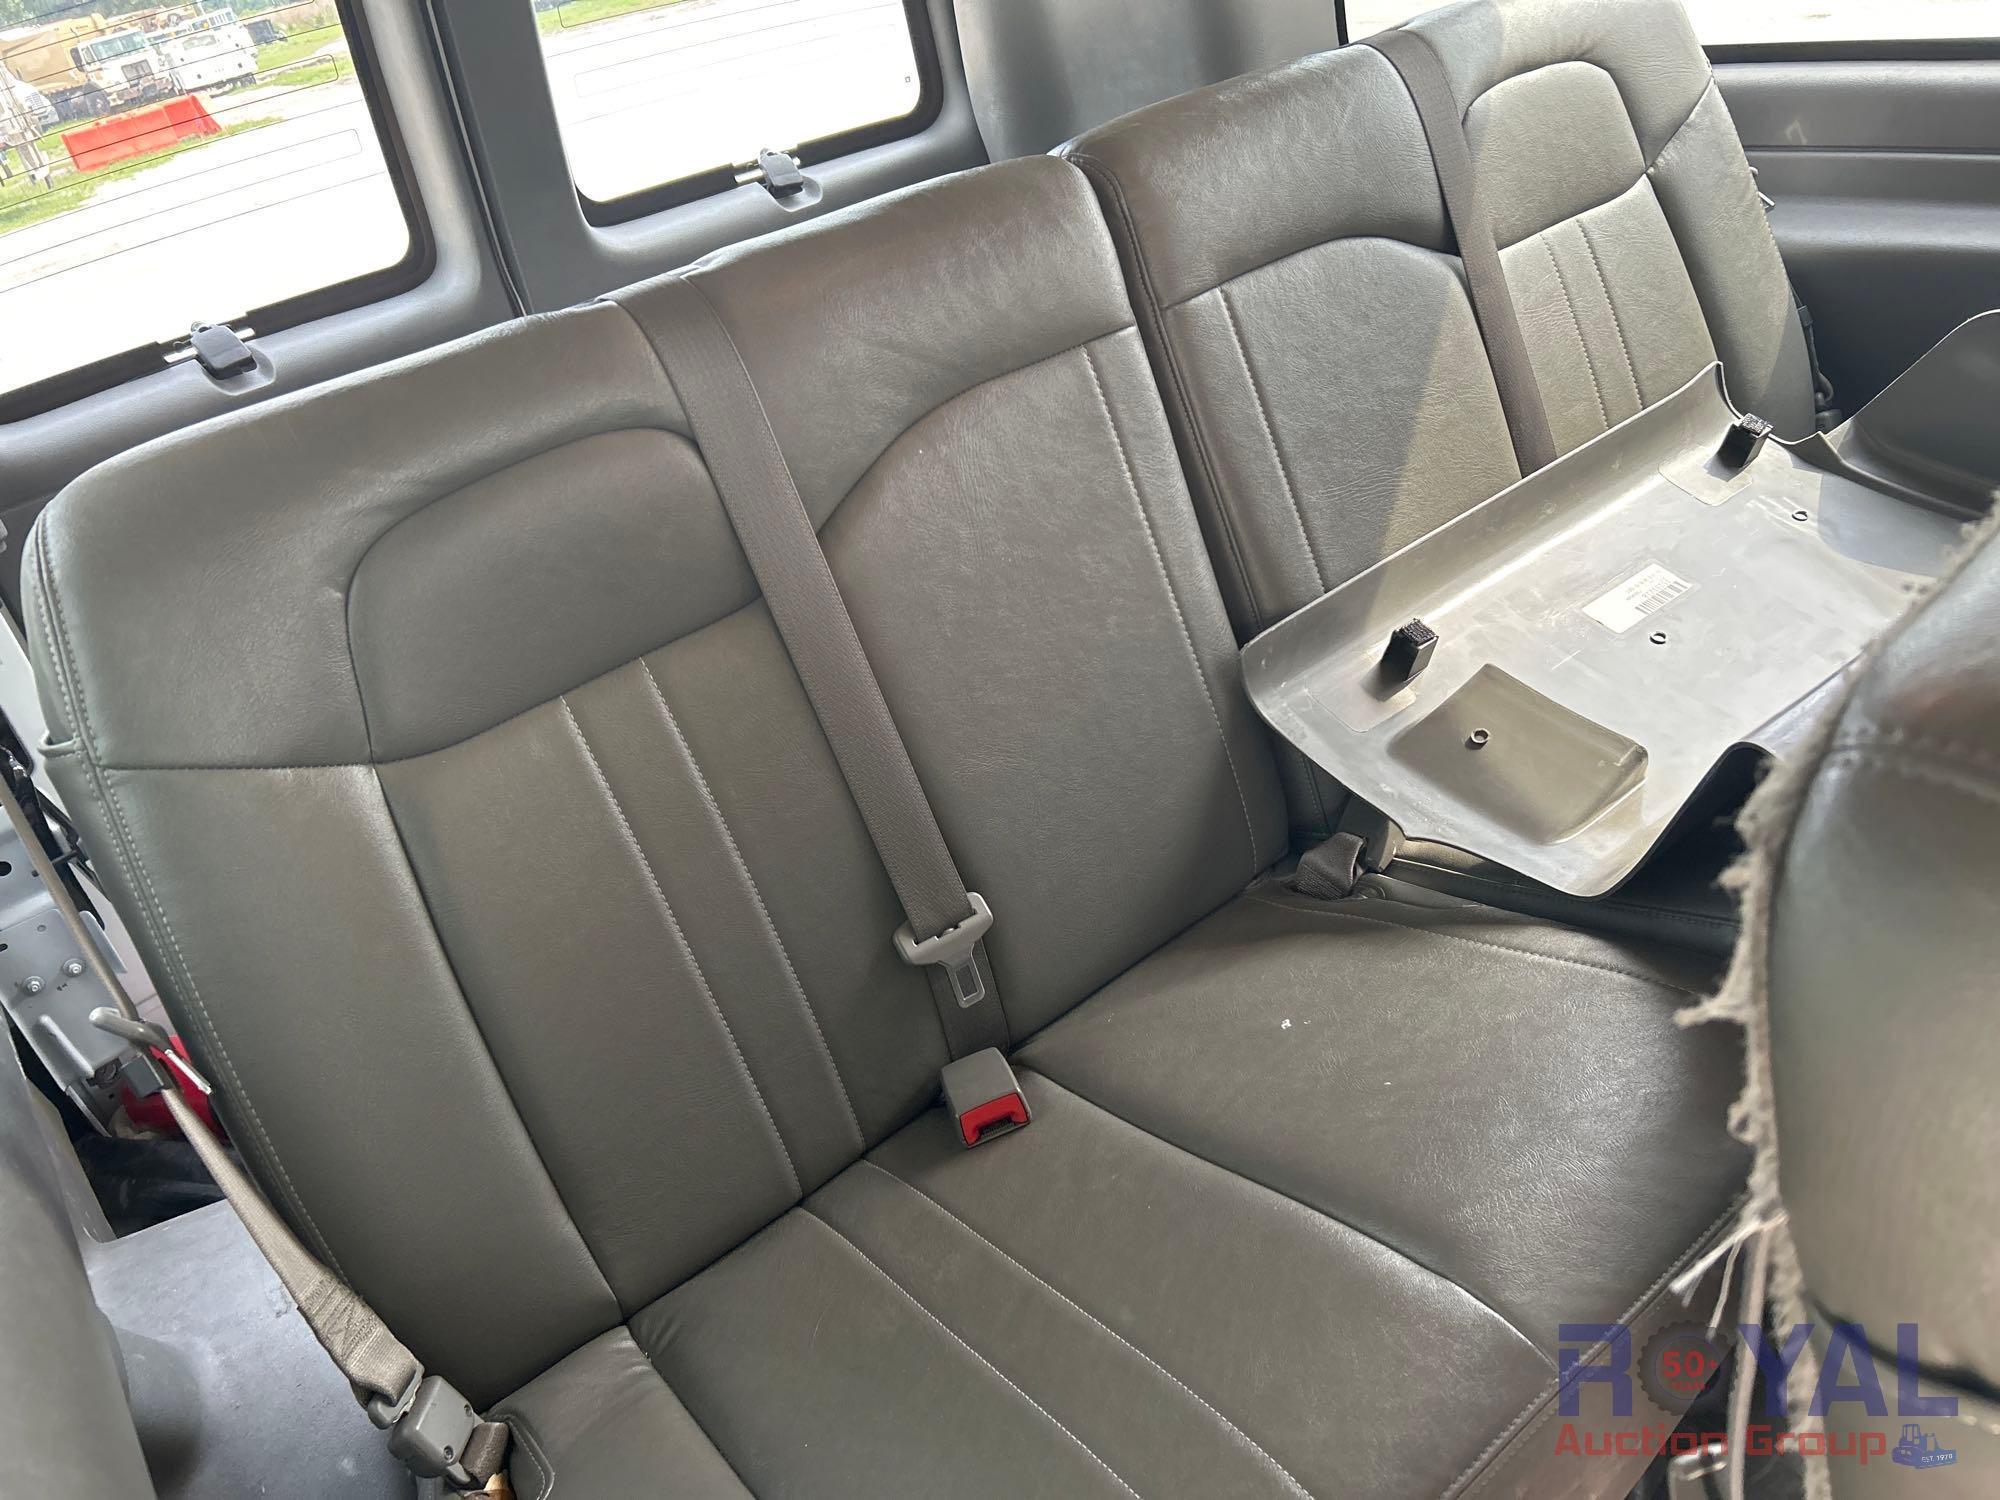 2016 Chevrolet Express Passenger Van